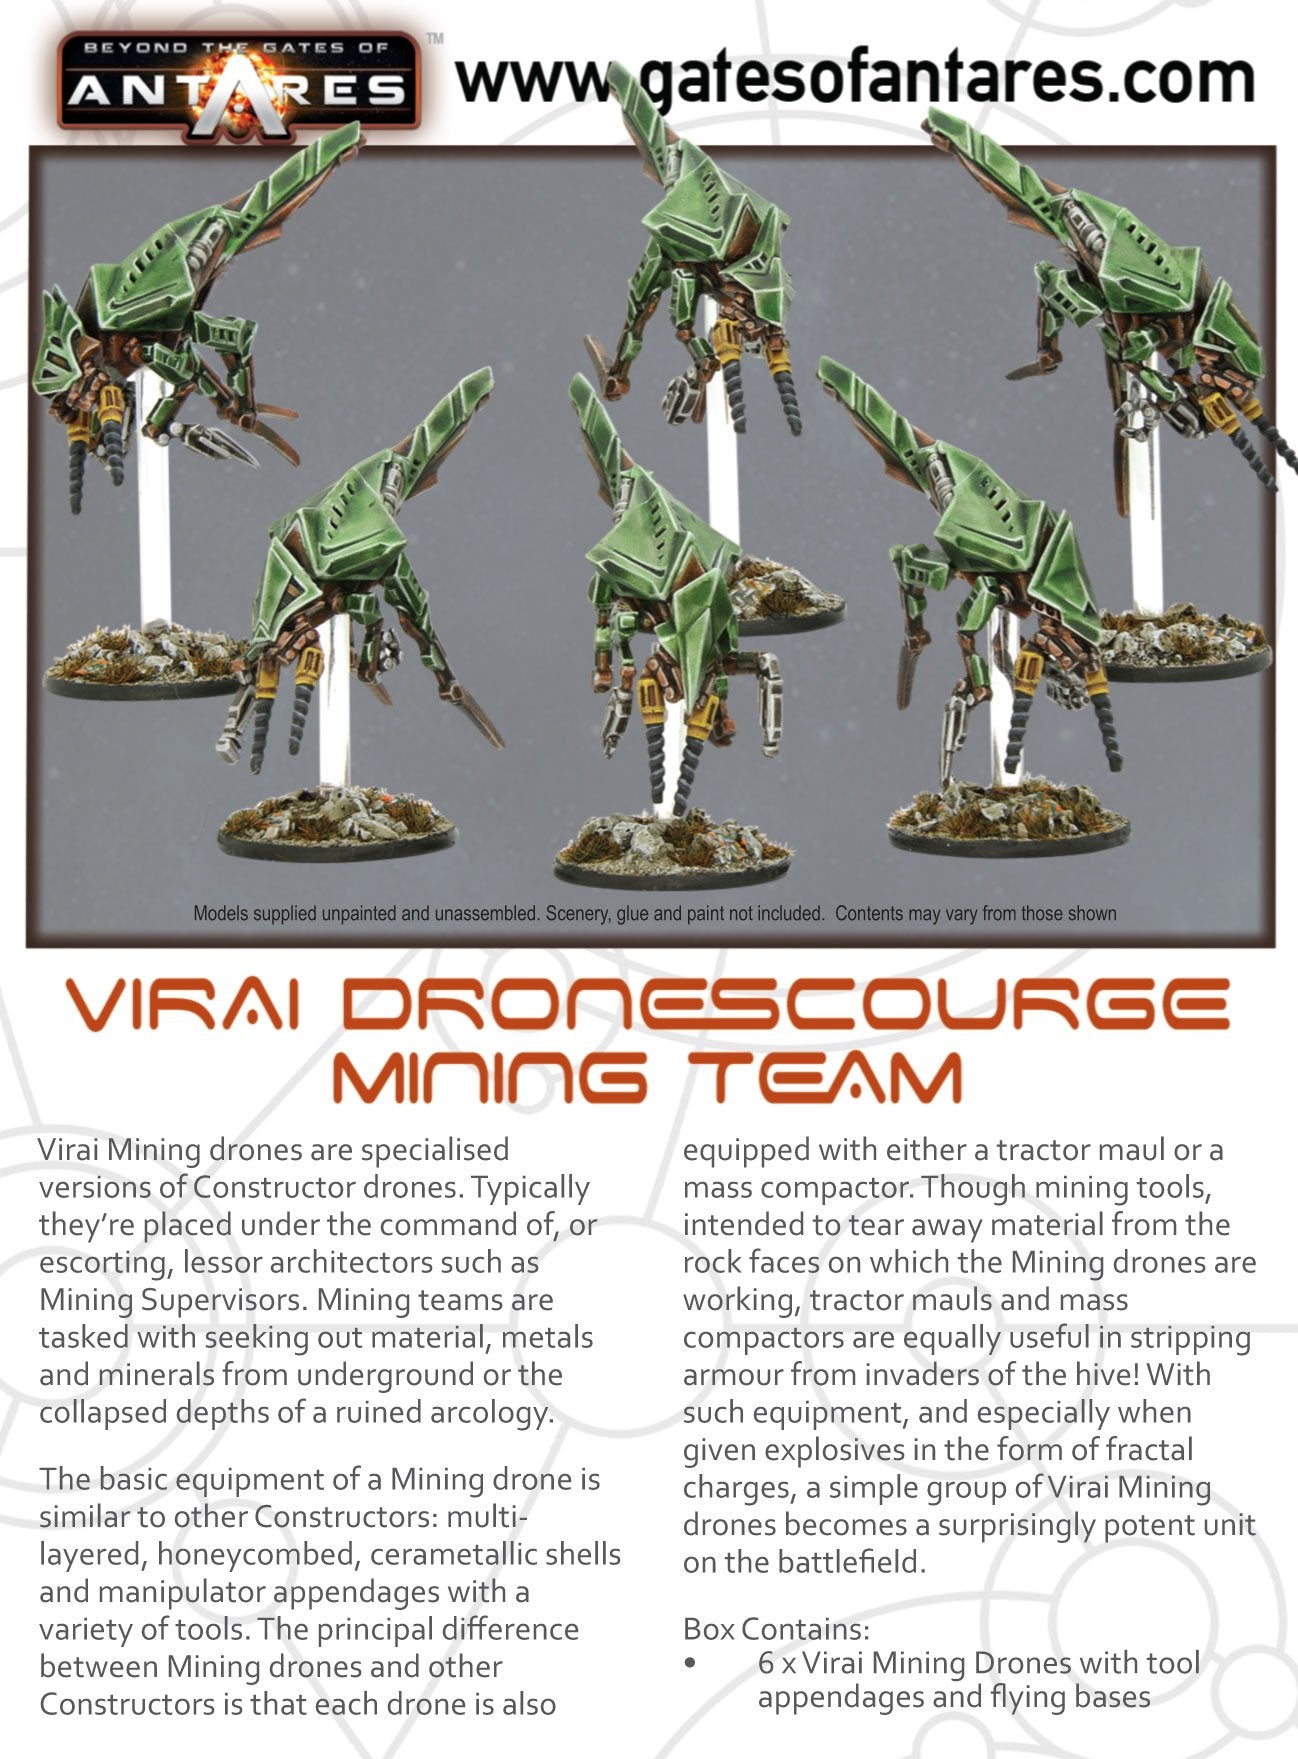 Virai Dronescourge Mining Team